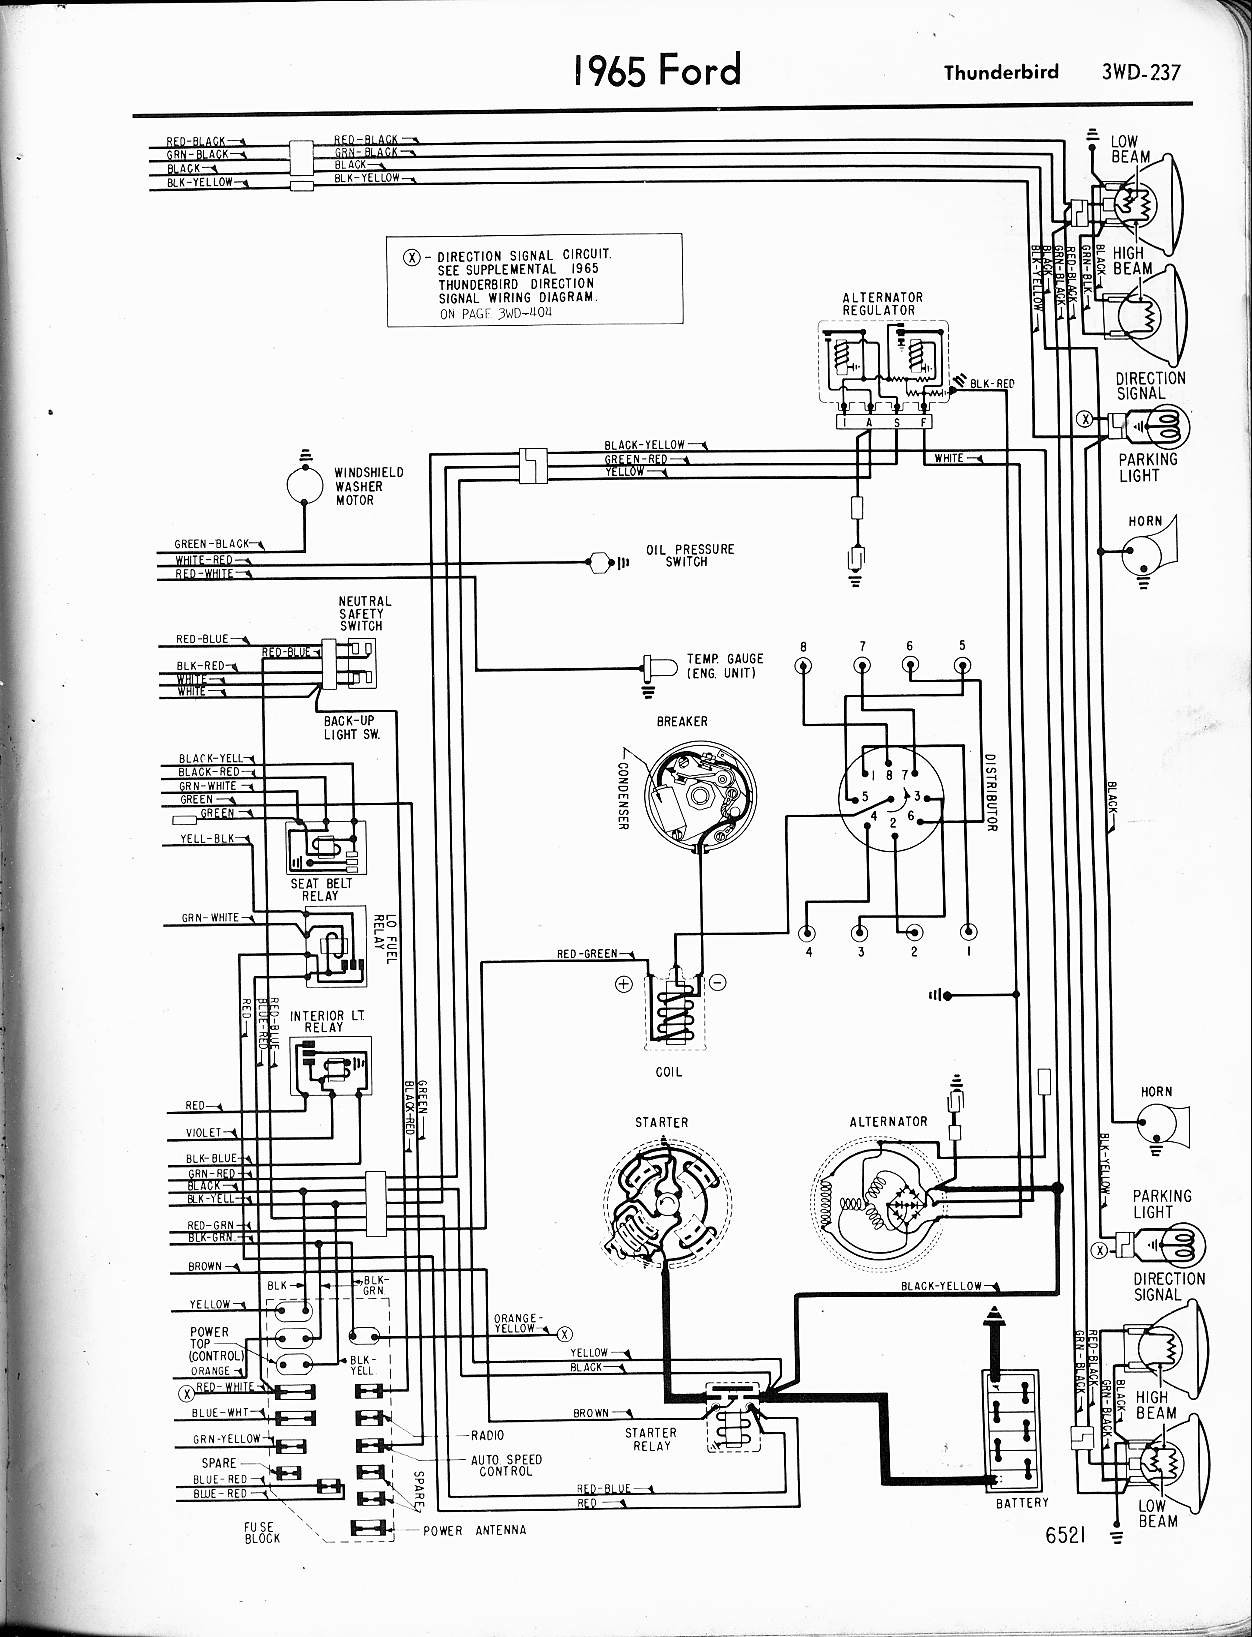 diagram wiring ford econoline wiring diagram alternator truck tail 1955 Ford Turn Signal Wiring Diagram 56